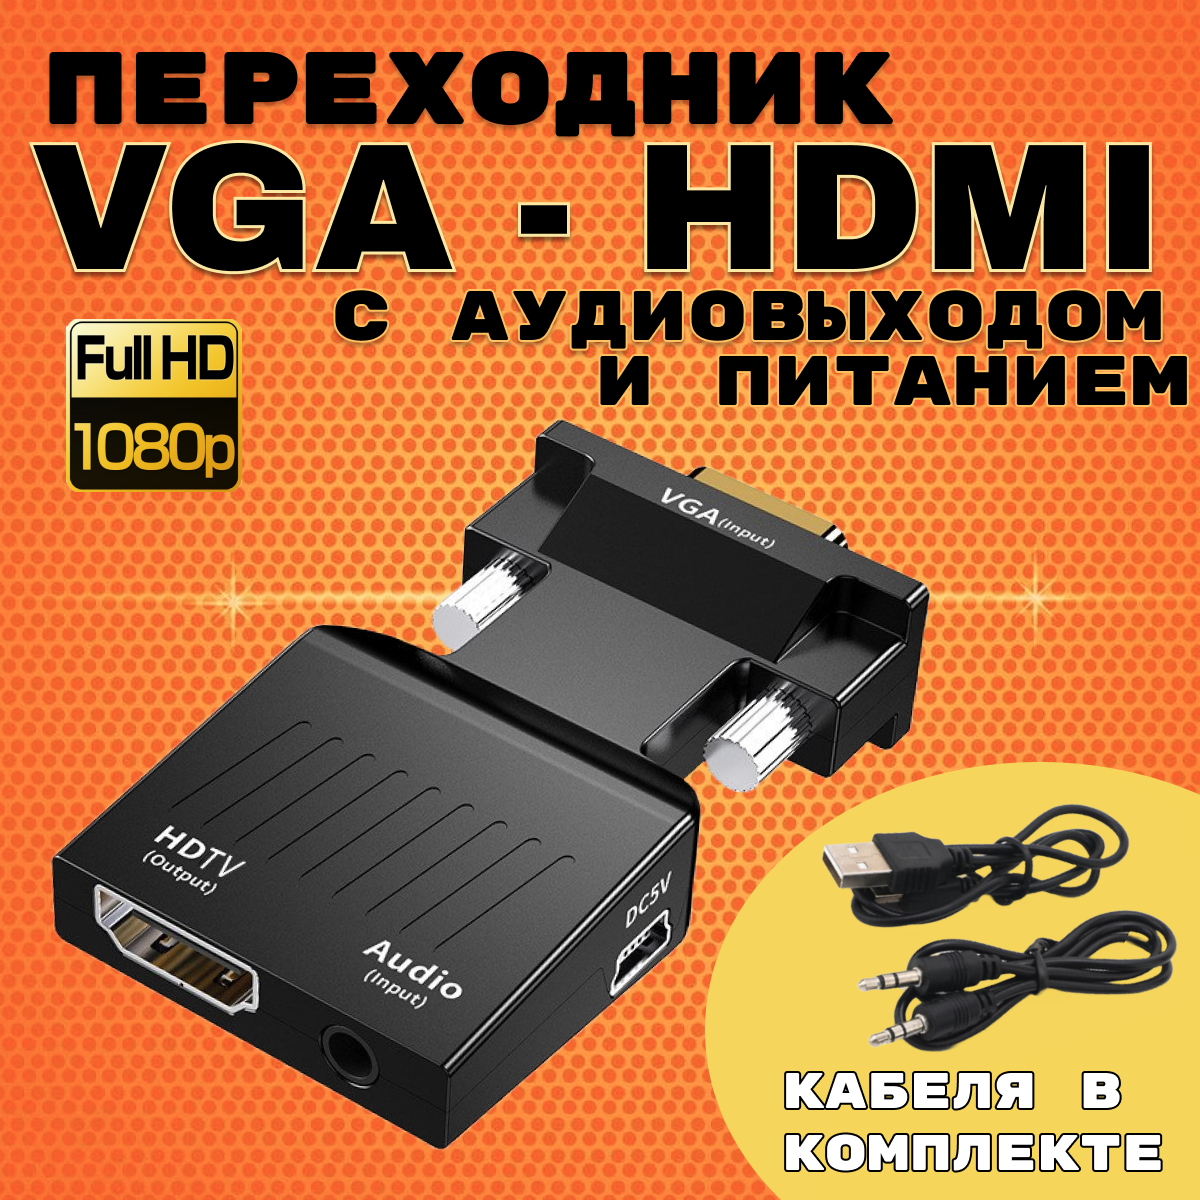 Портативный адаптер переходник конвертер VGA - HDMI